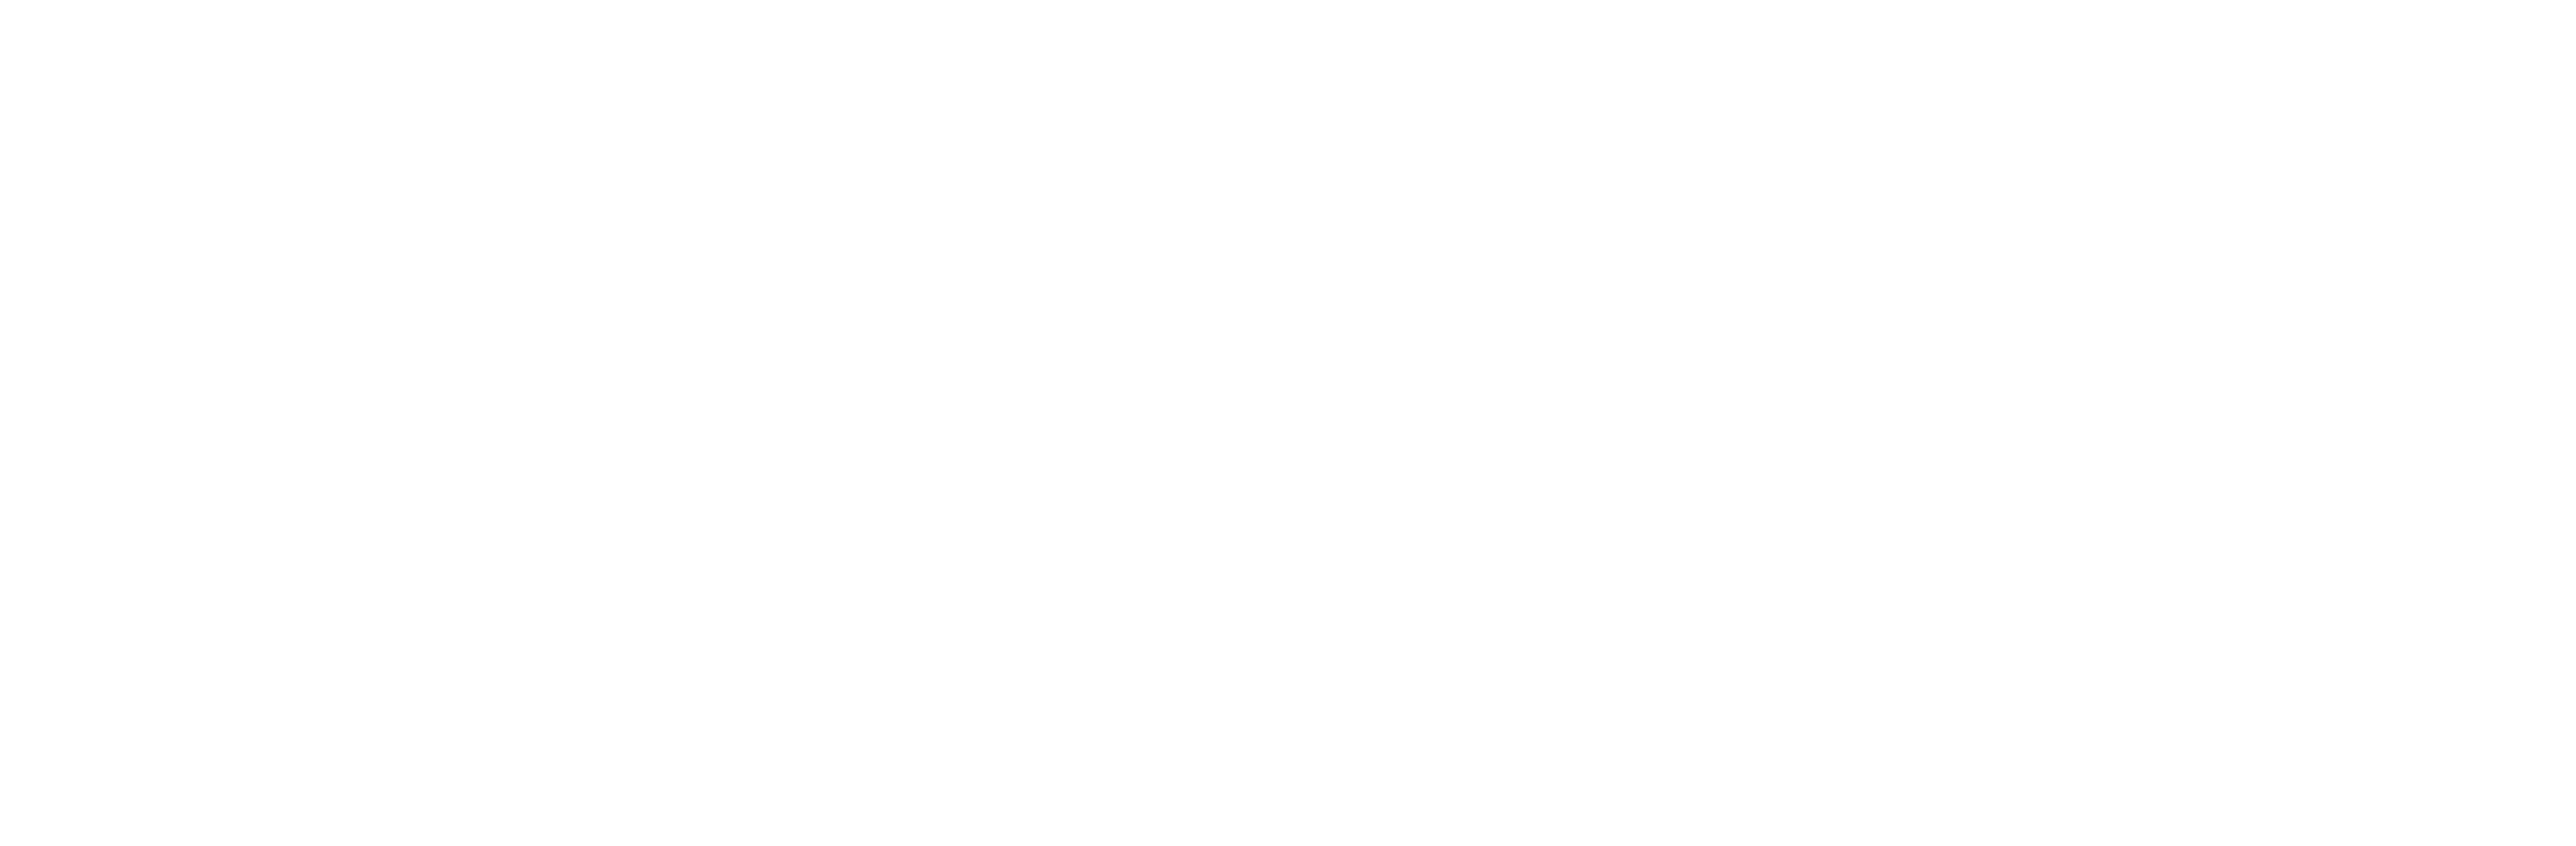 Doha Cabs Limousine